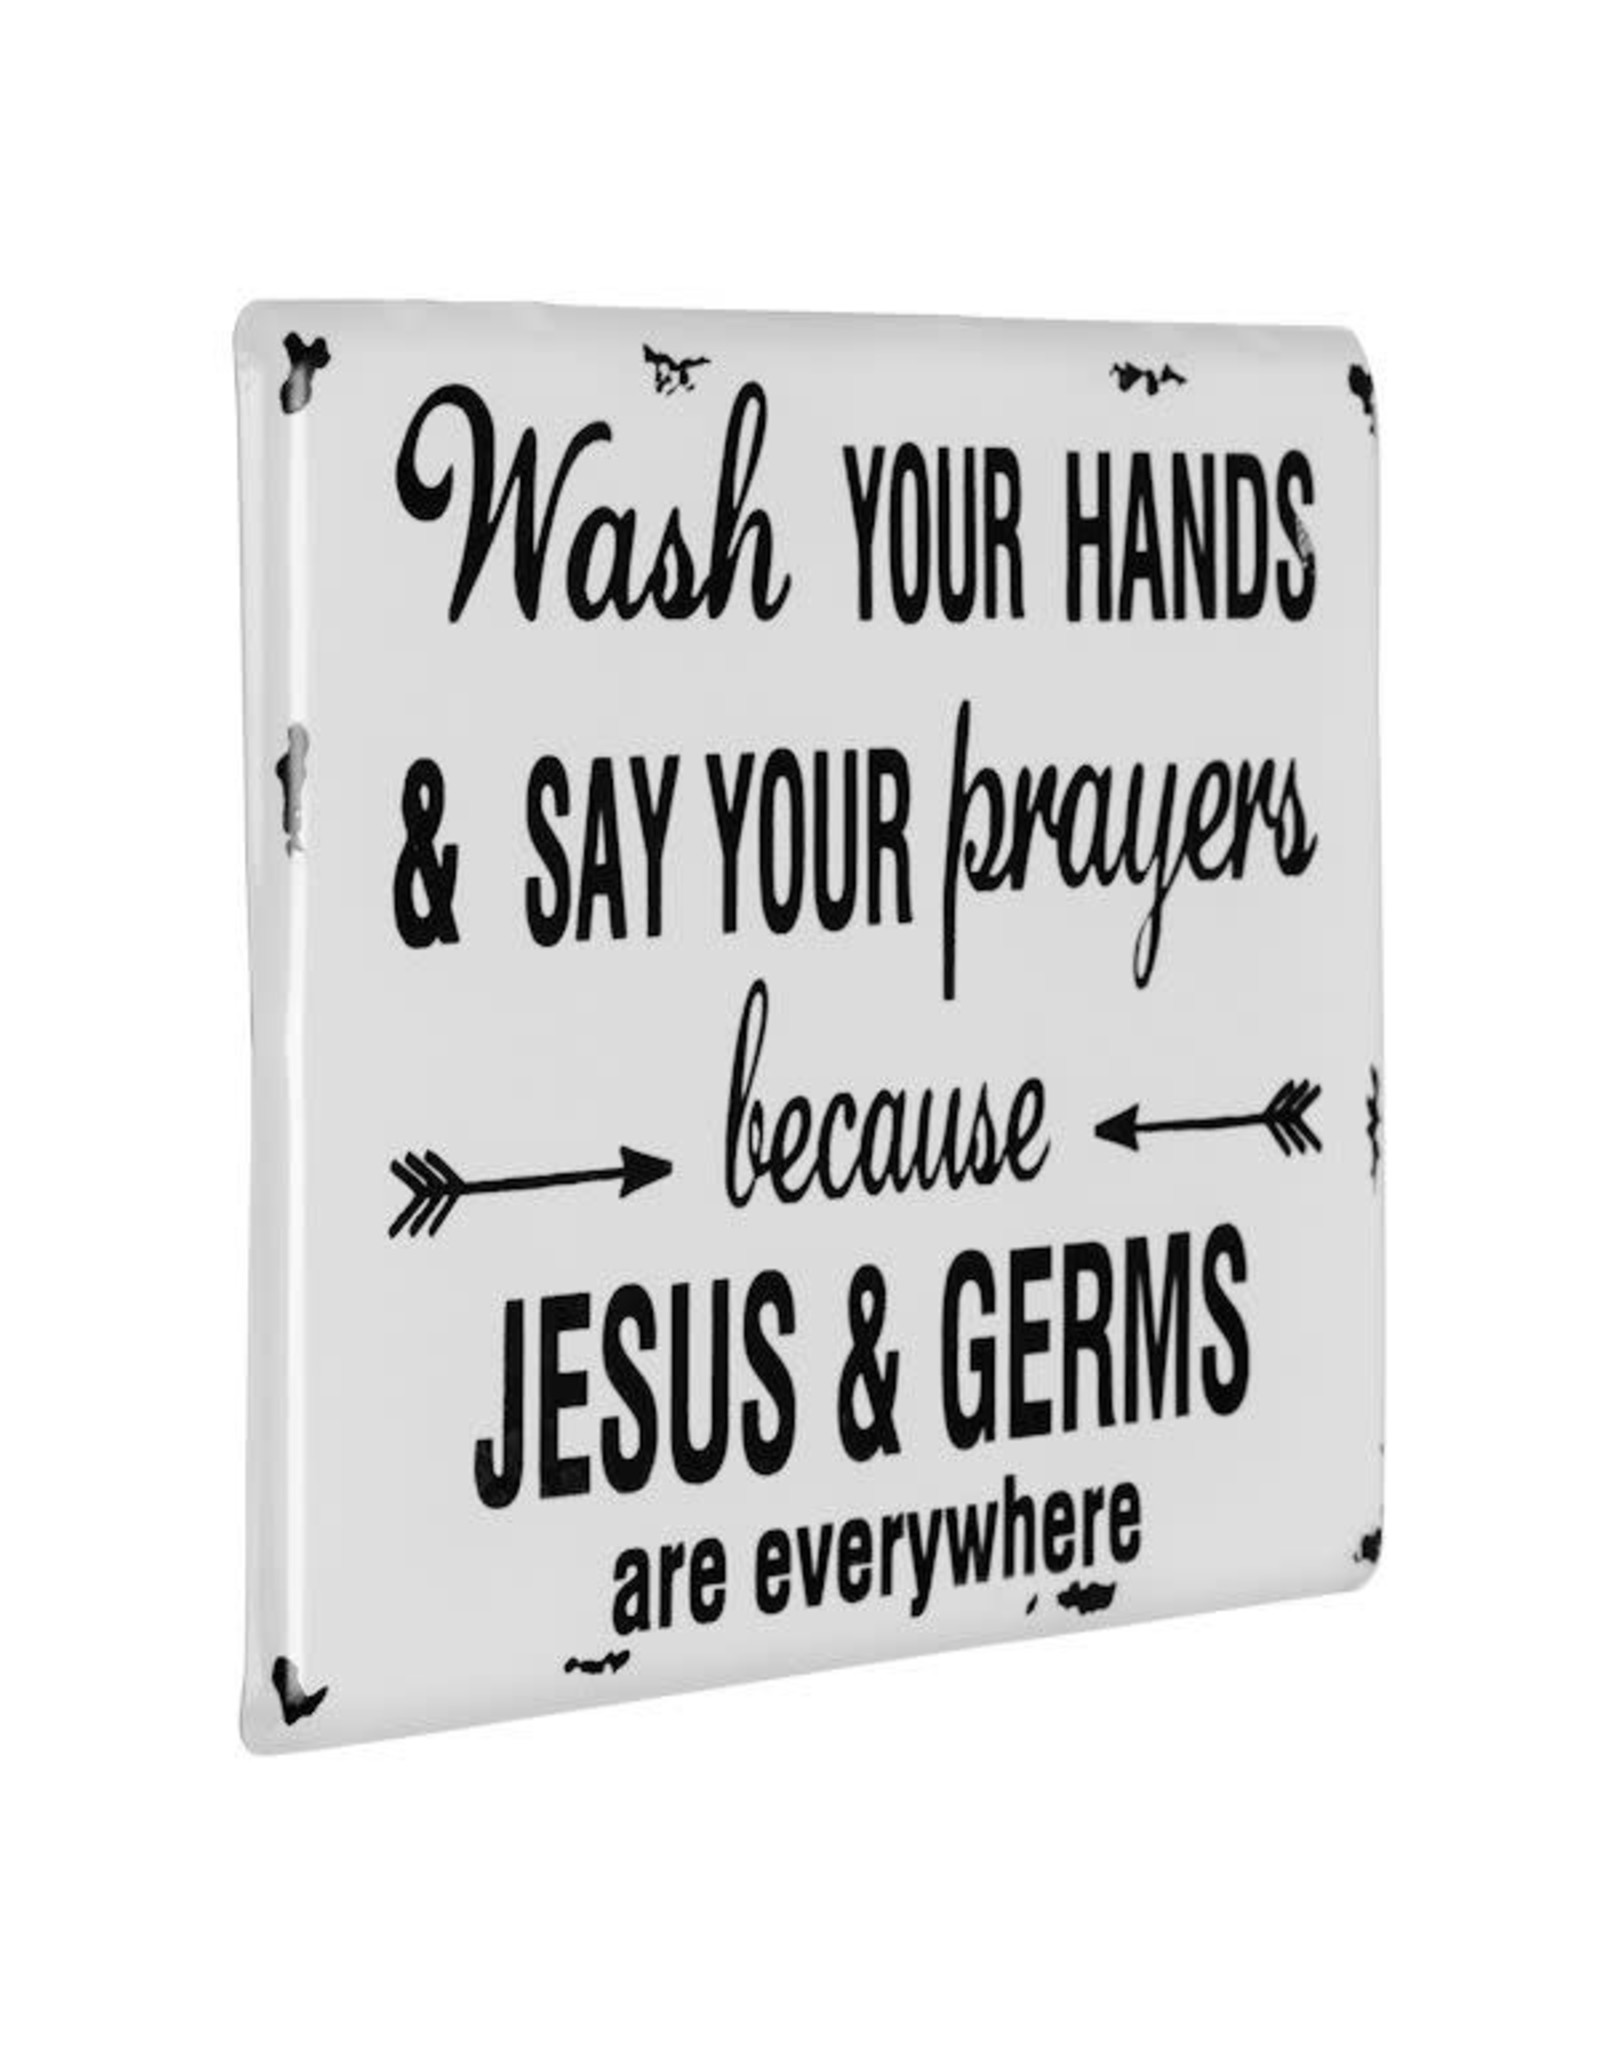 Wash Your Hands Prayers Jesus